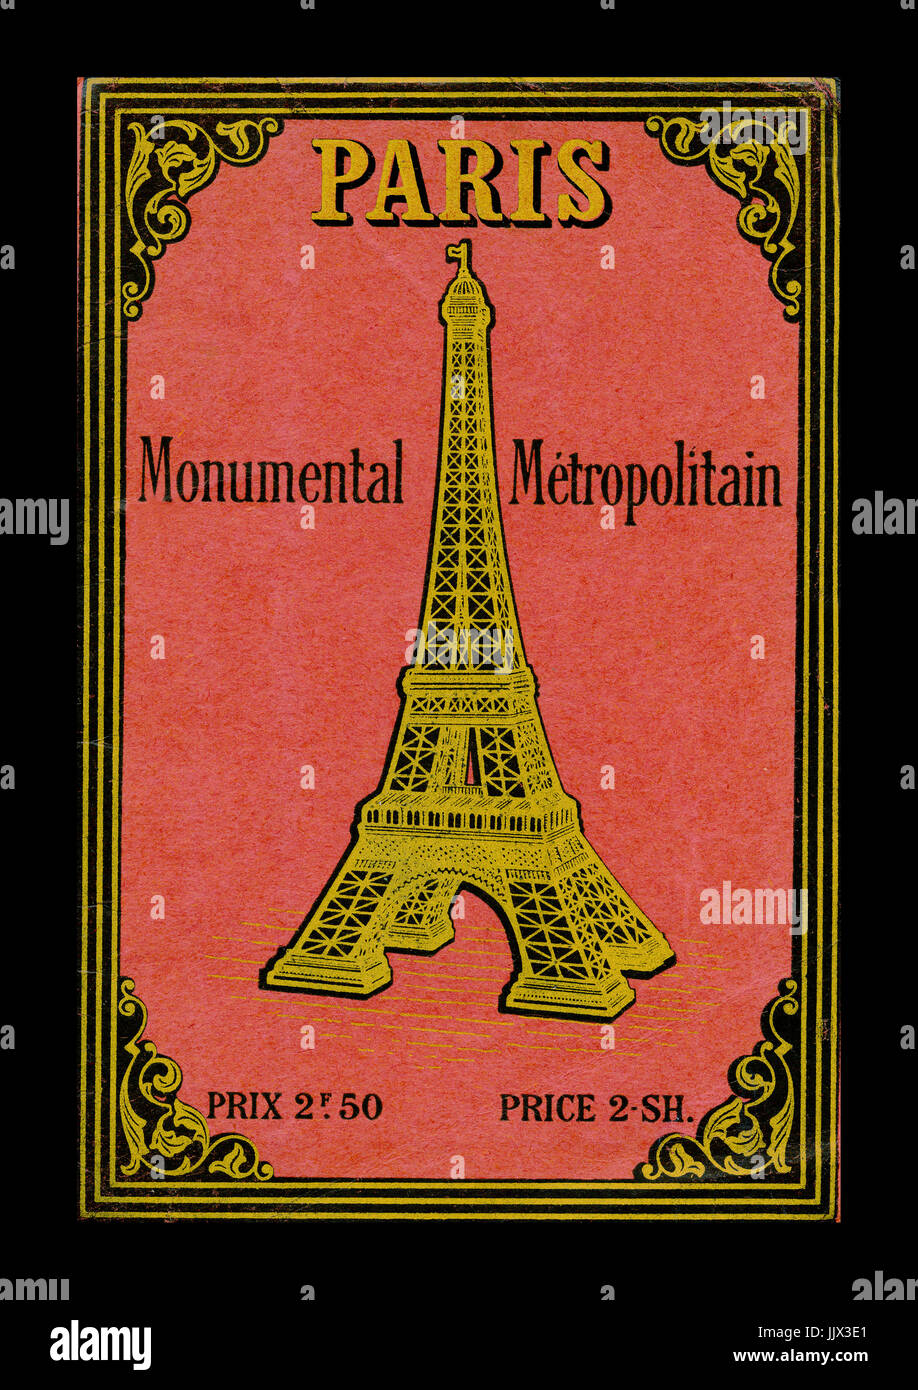 PARIGI Torre EIFFEL del 1900 MONUMENTI D'EPOCA MONUMENTALI METROPOLITANI MAPPA d'epoca Rare del 1900 Art Nouveau Monumental Map di Parigi Francia Foto Stock